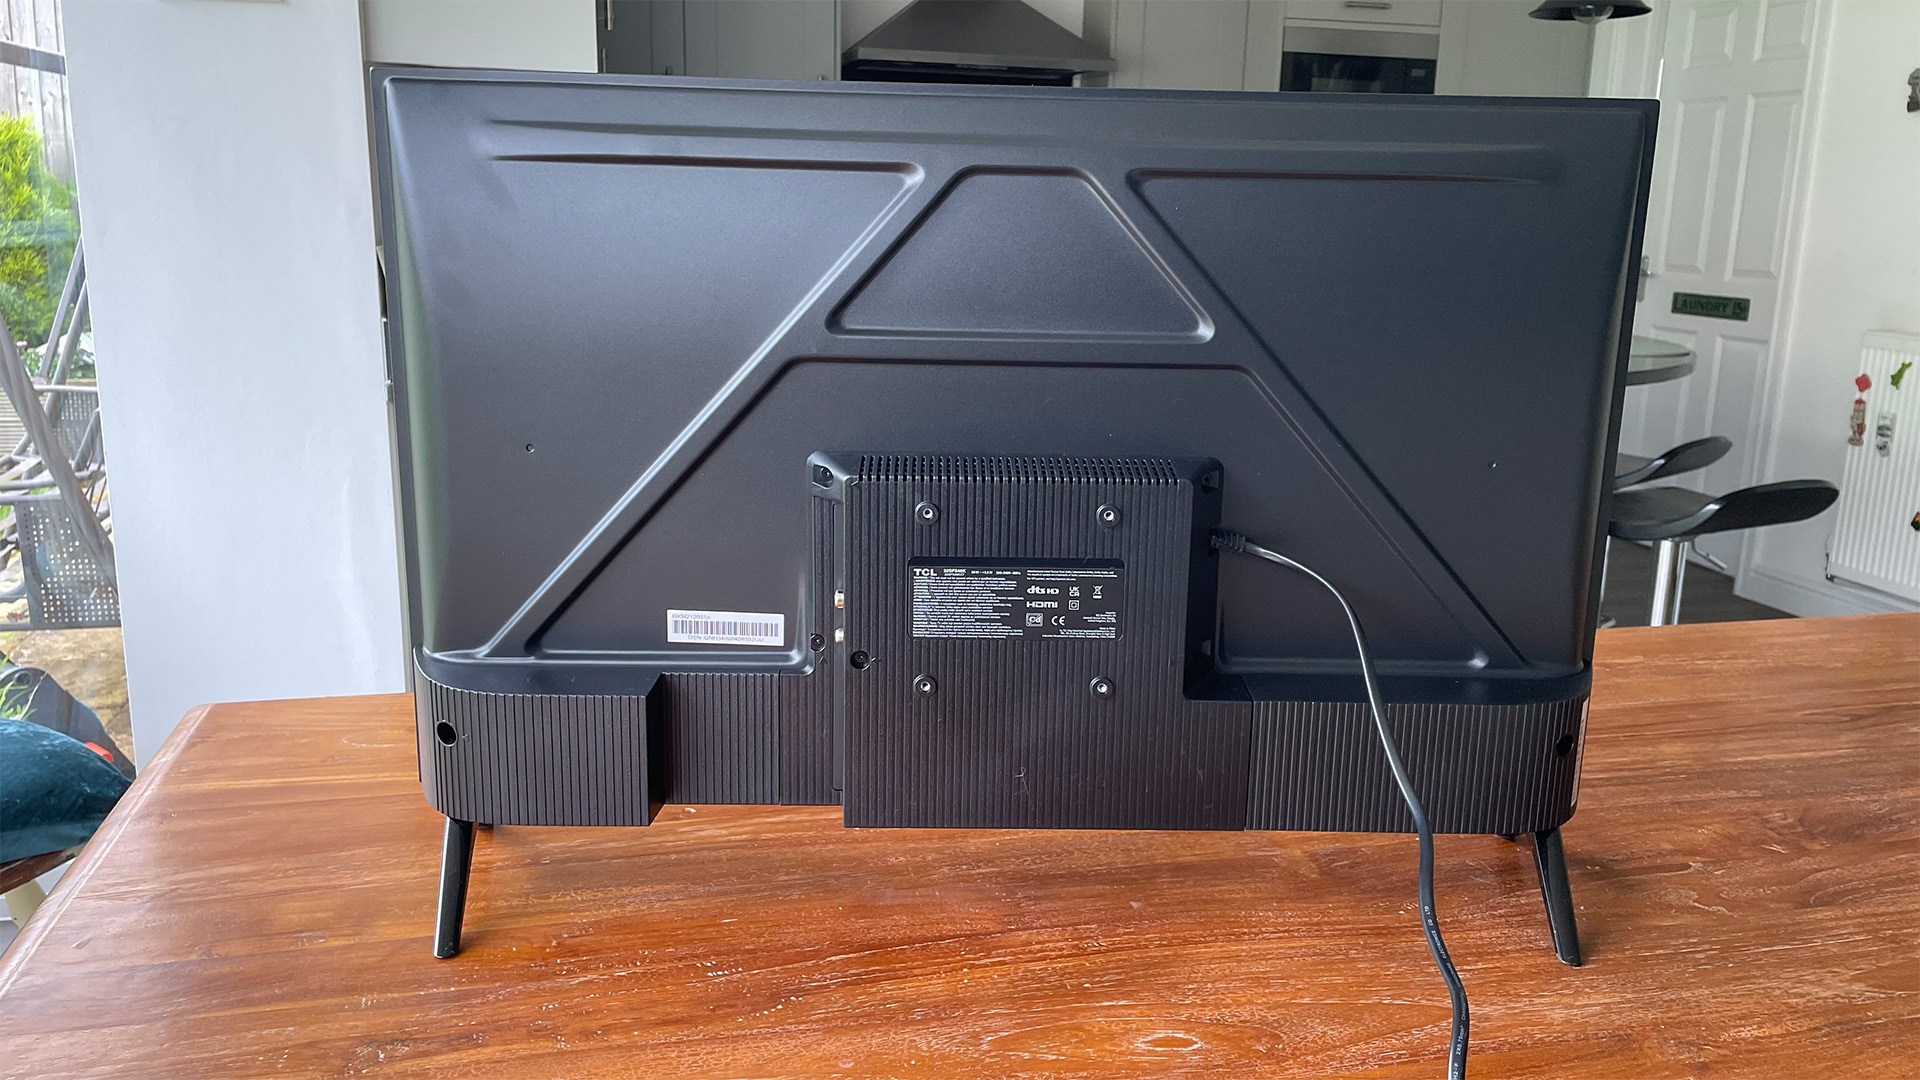 TCL 32SF540K 32英寸电视，图片来自木制桌子上的电视机后部